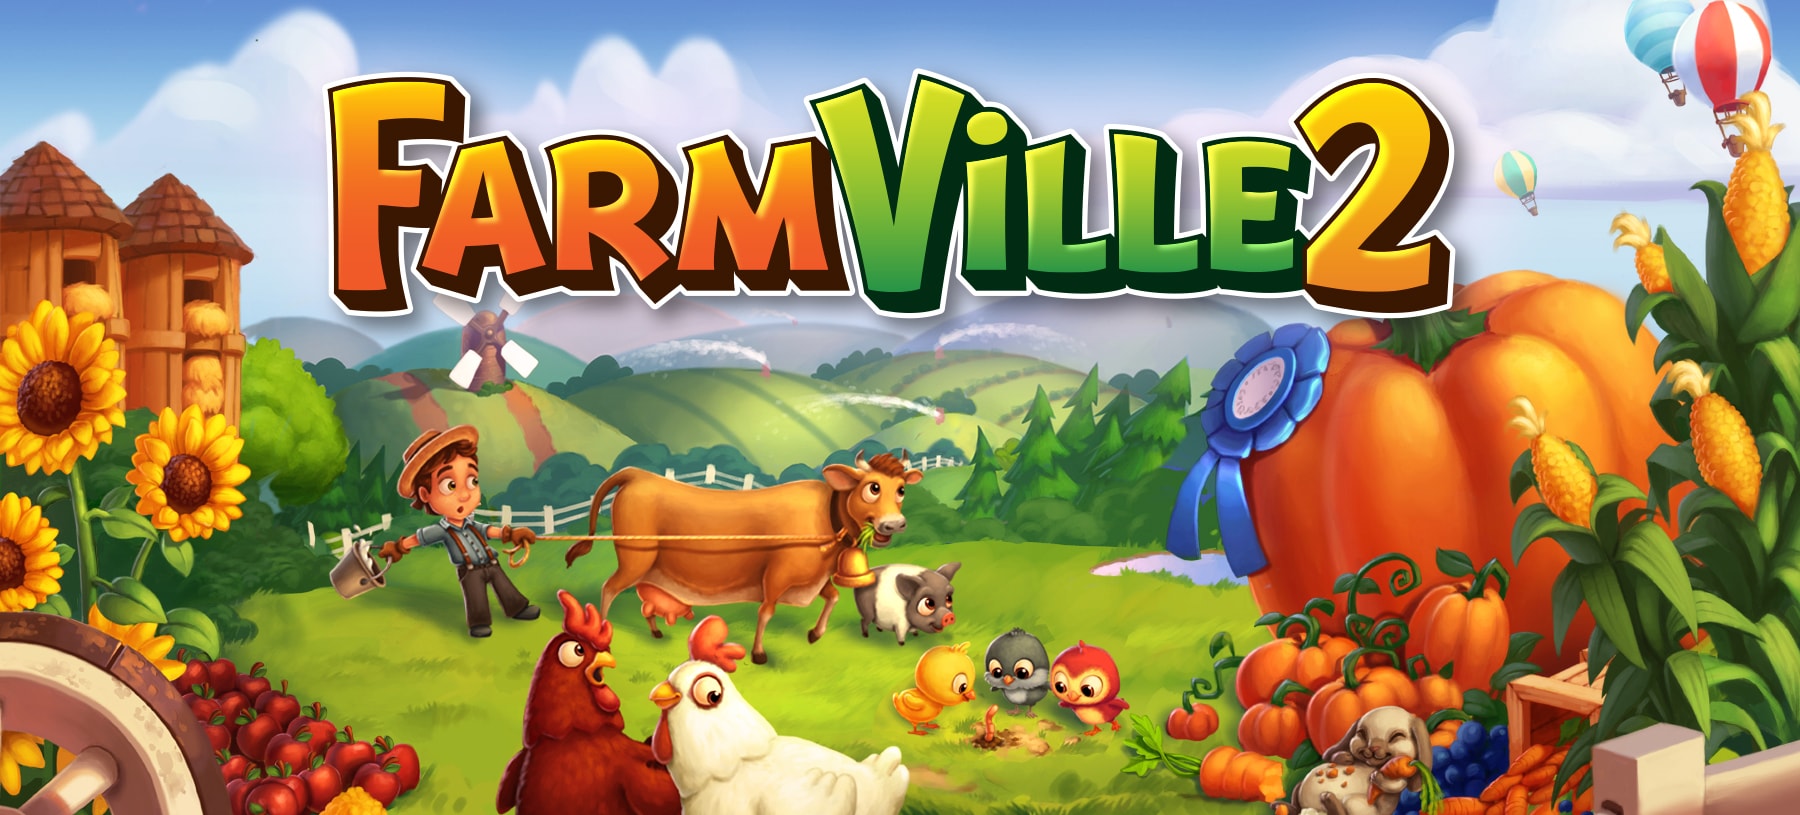 farmville 2 pc download